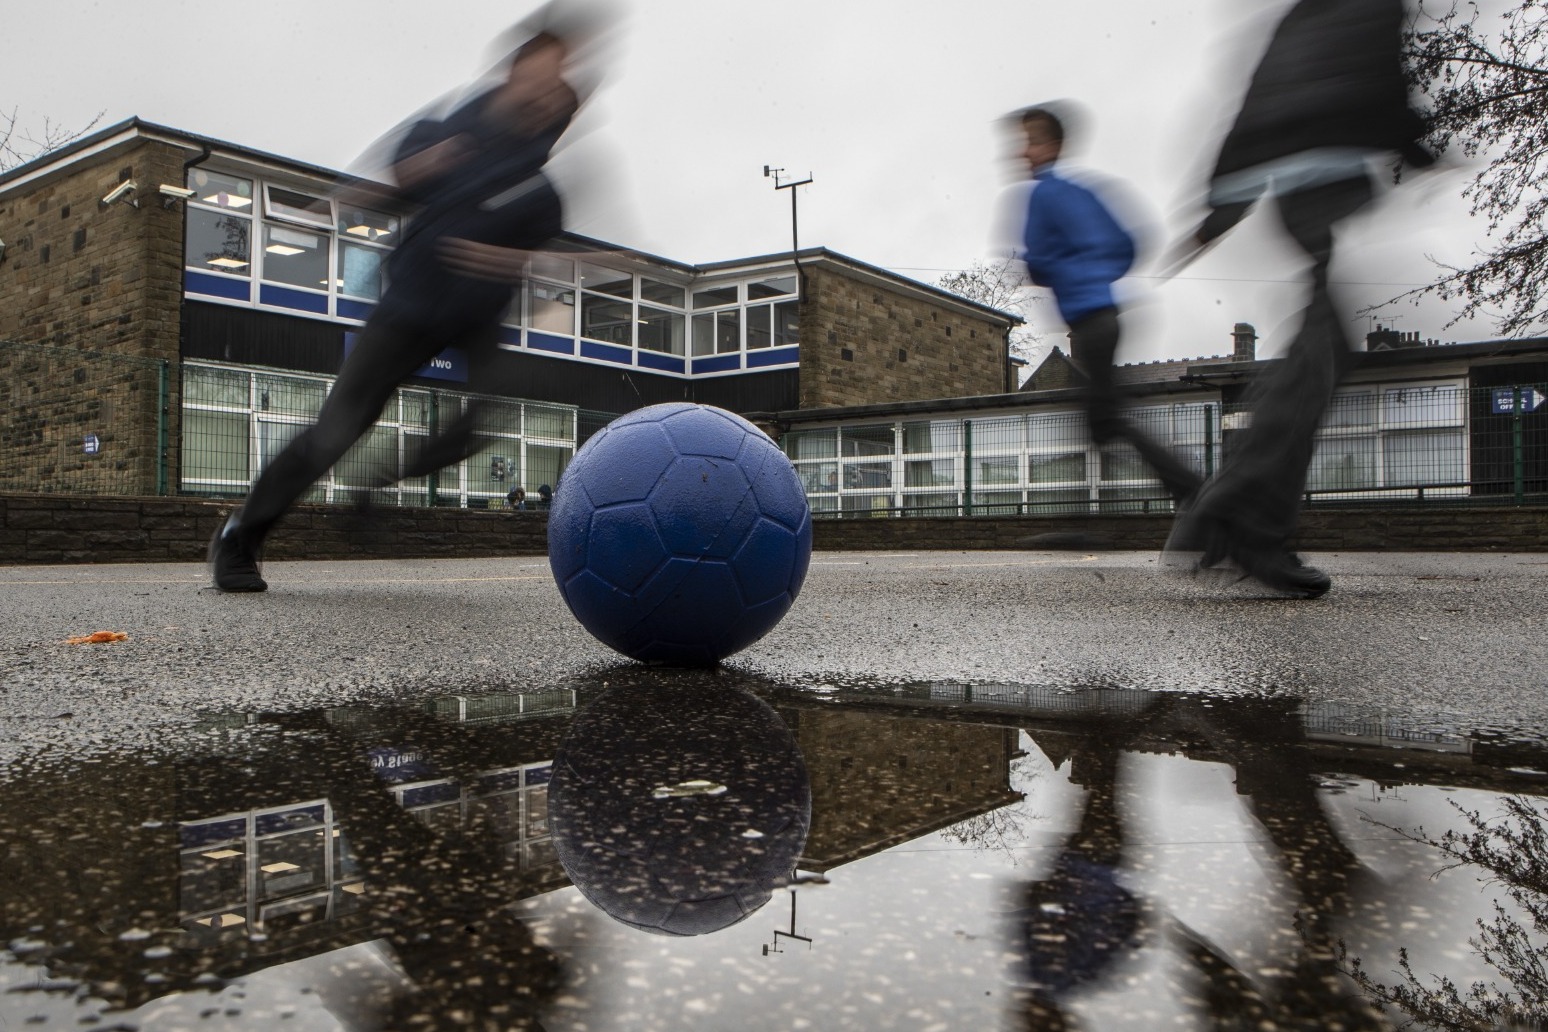 ‘More than half’ of England’s schools planning ‘catastrophic’ staff redundancies 